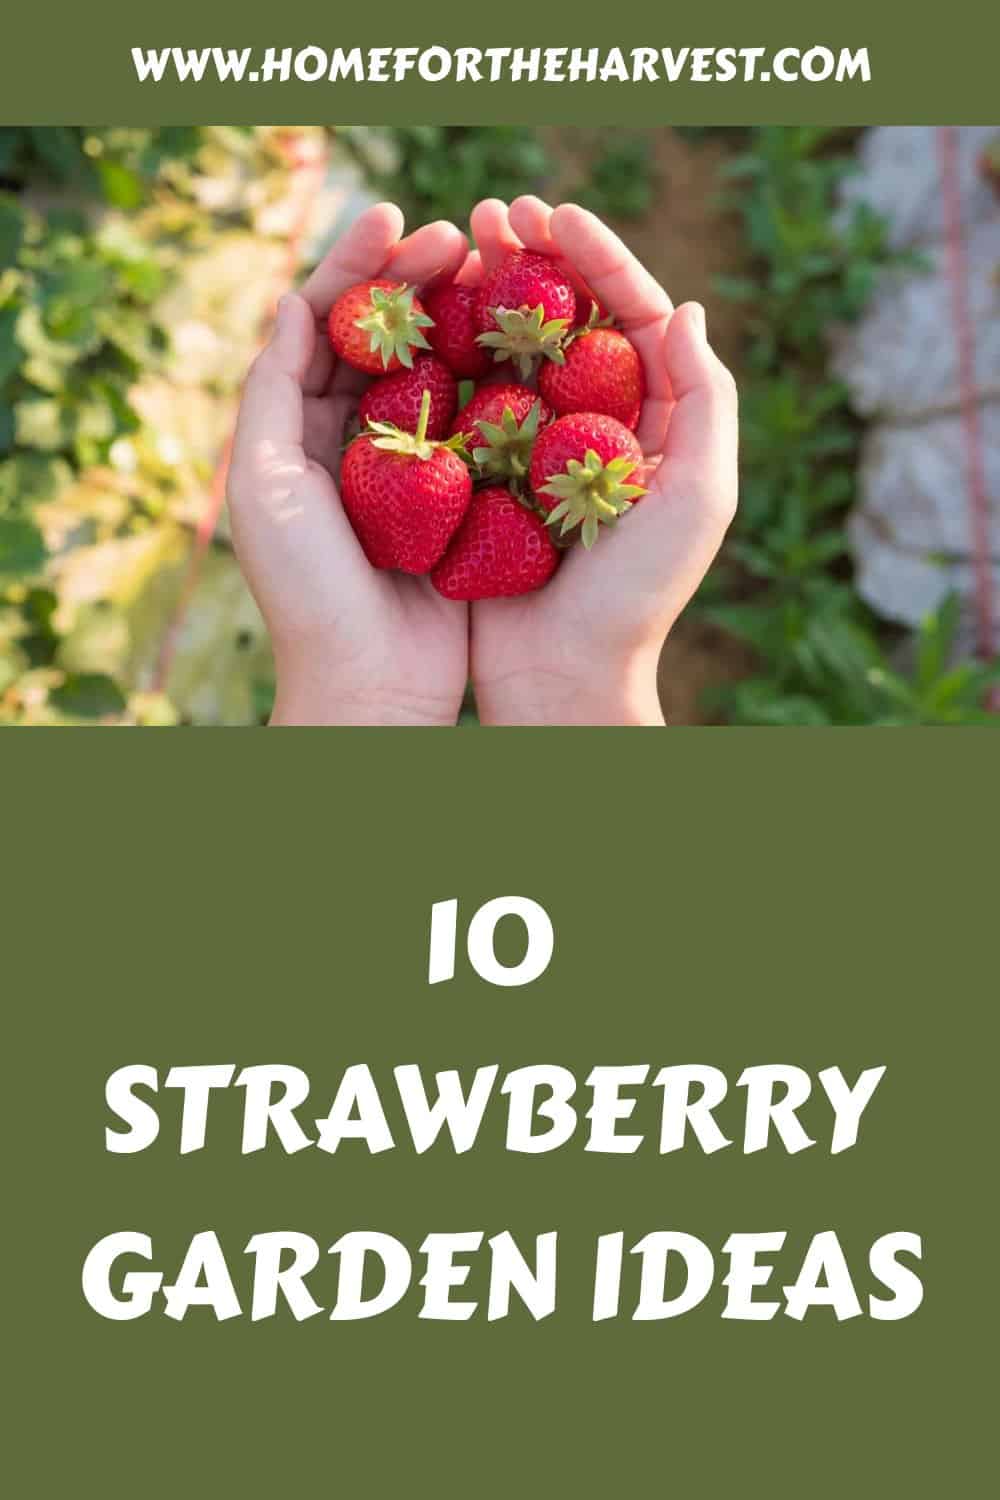 10 strawberry garden ideas generated pin 41202